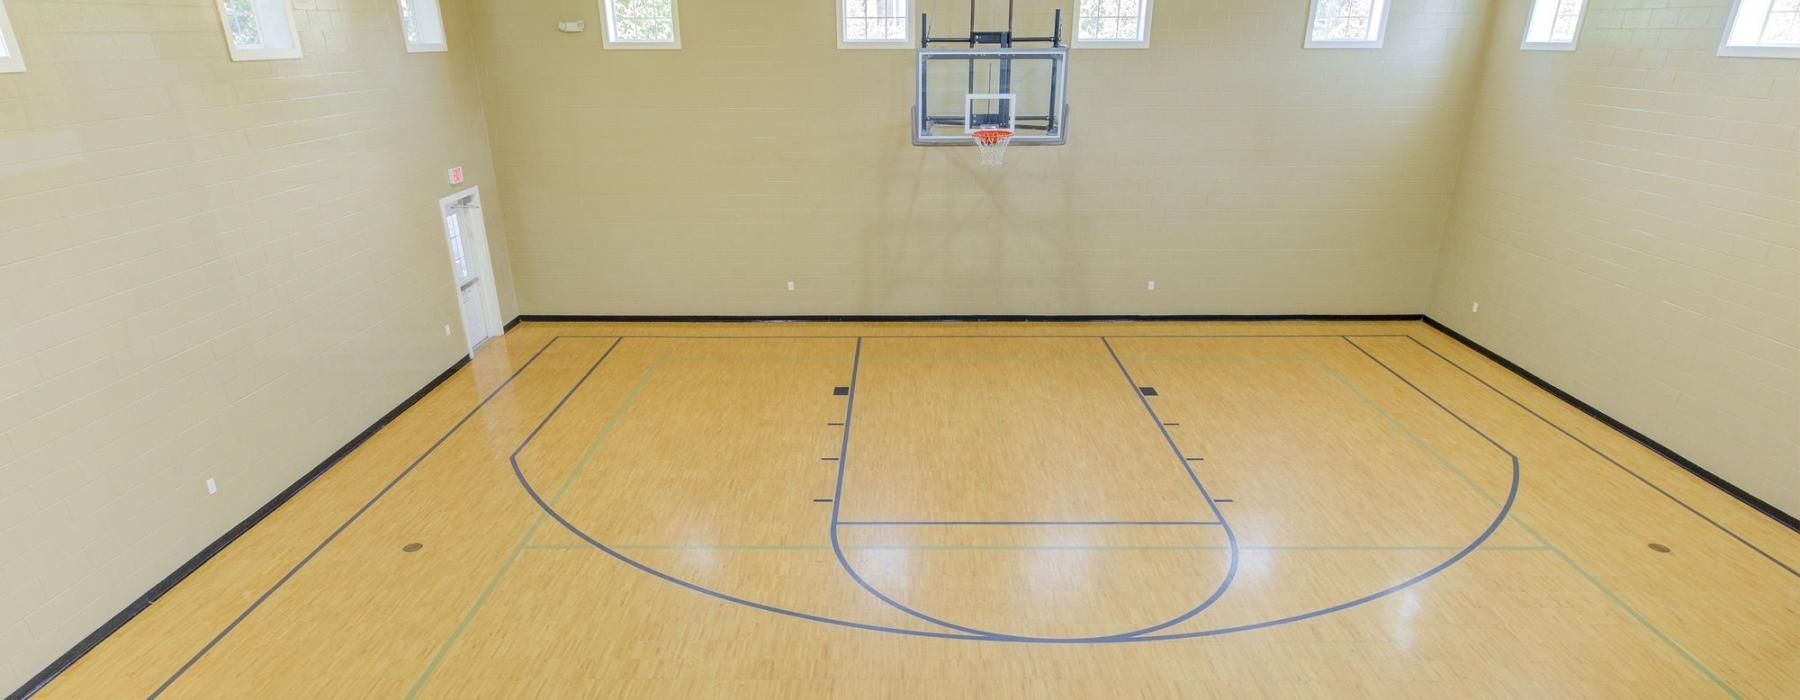 a basketball court with a basketball hoop